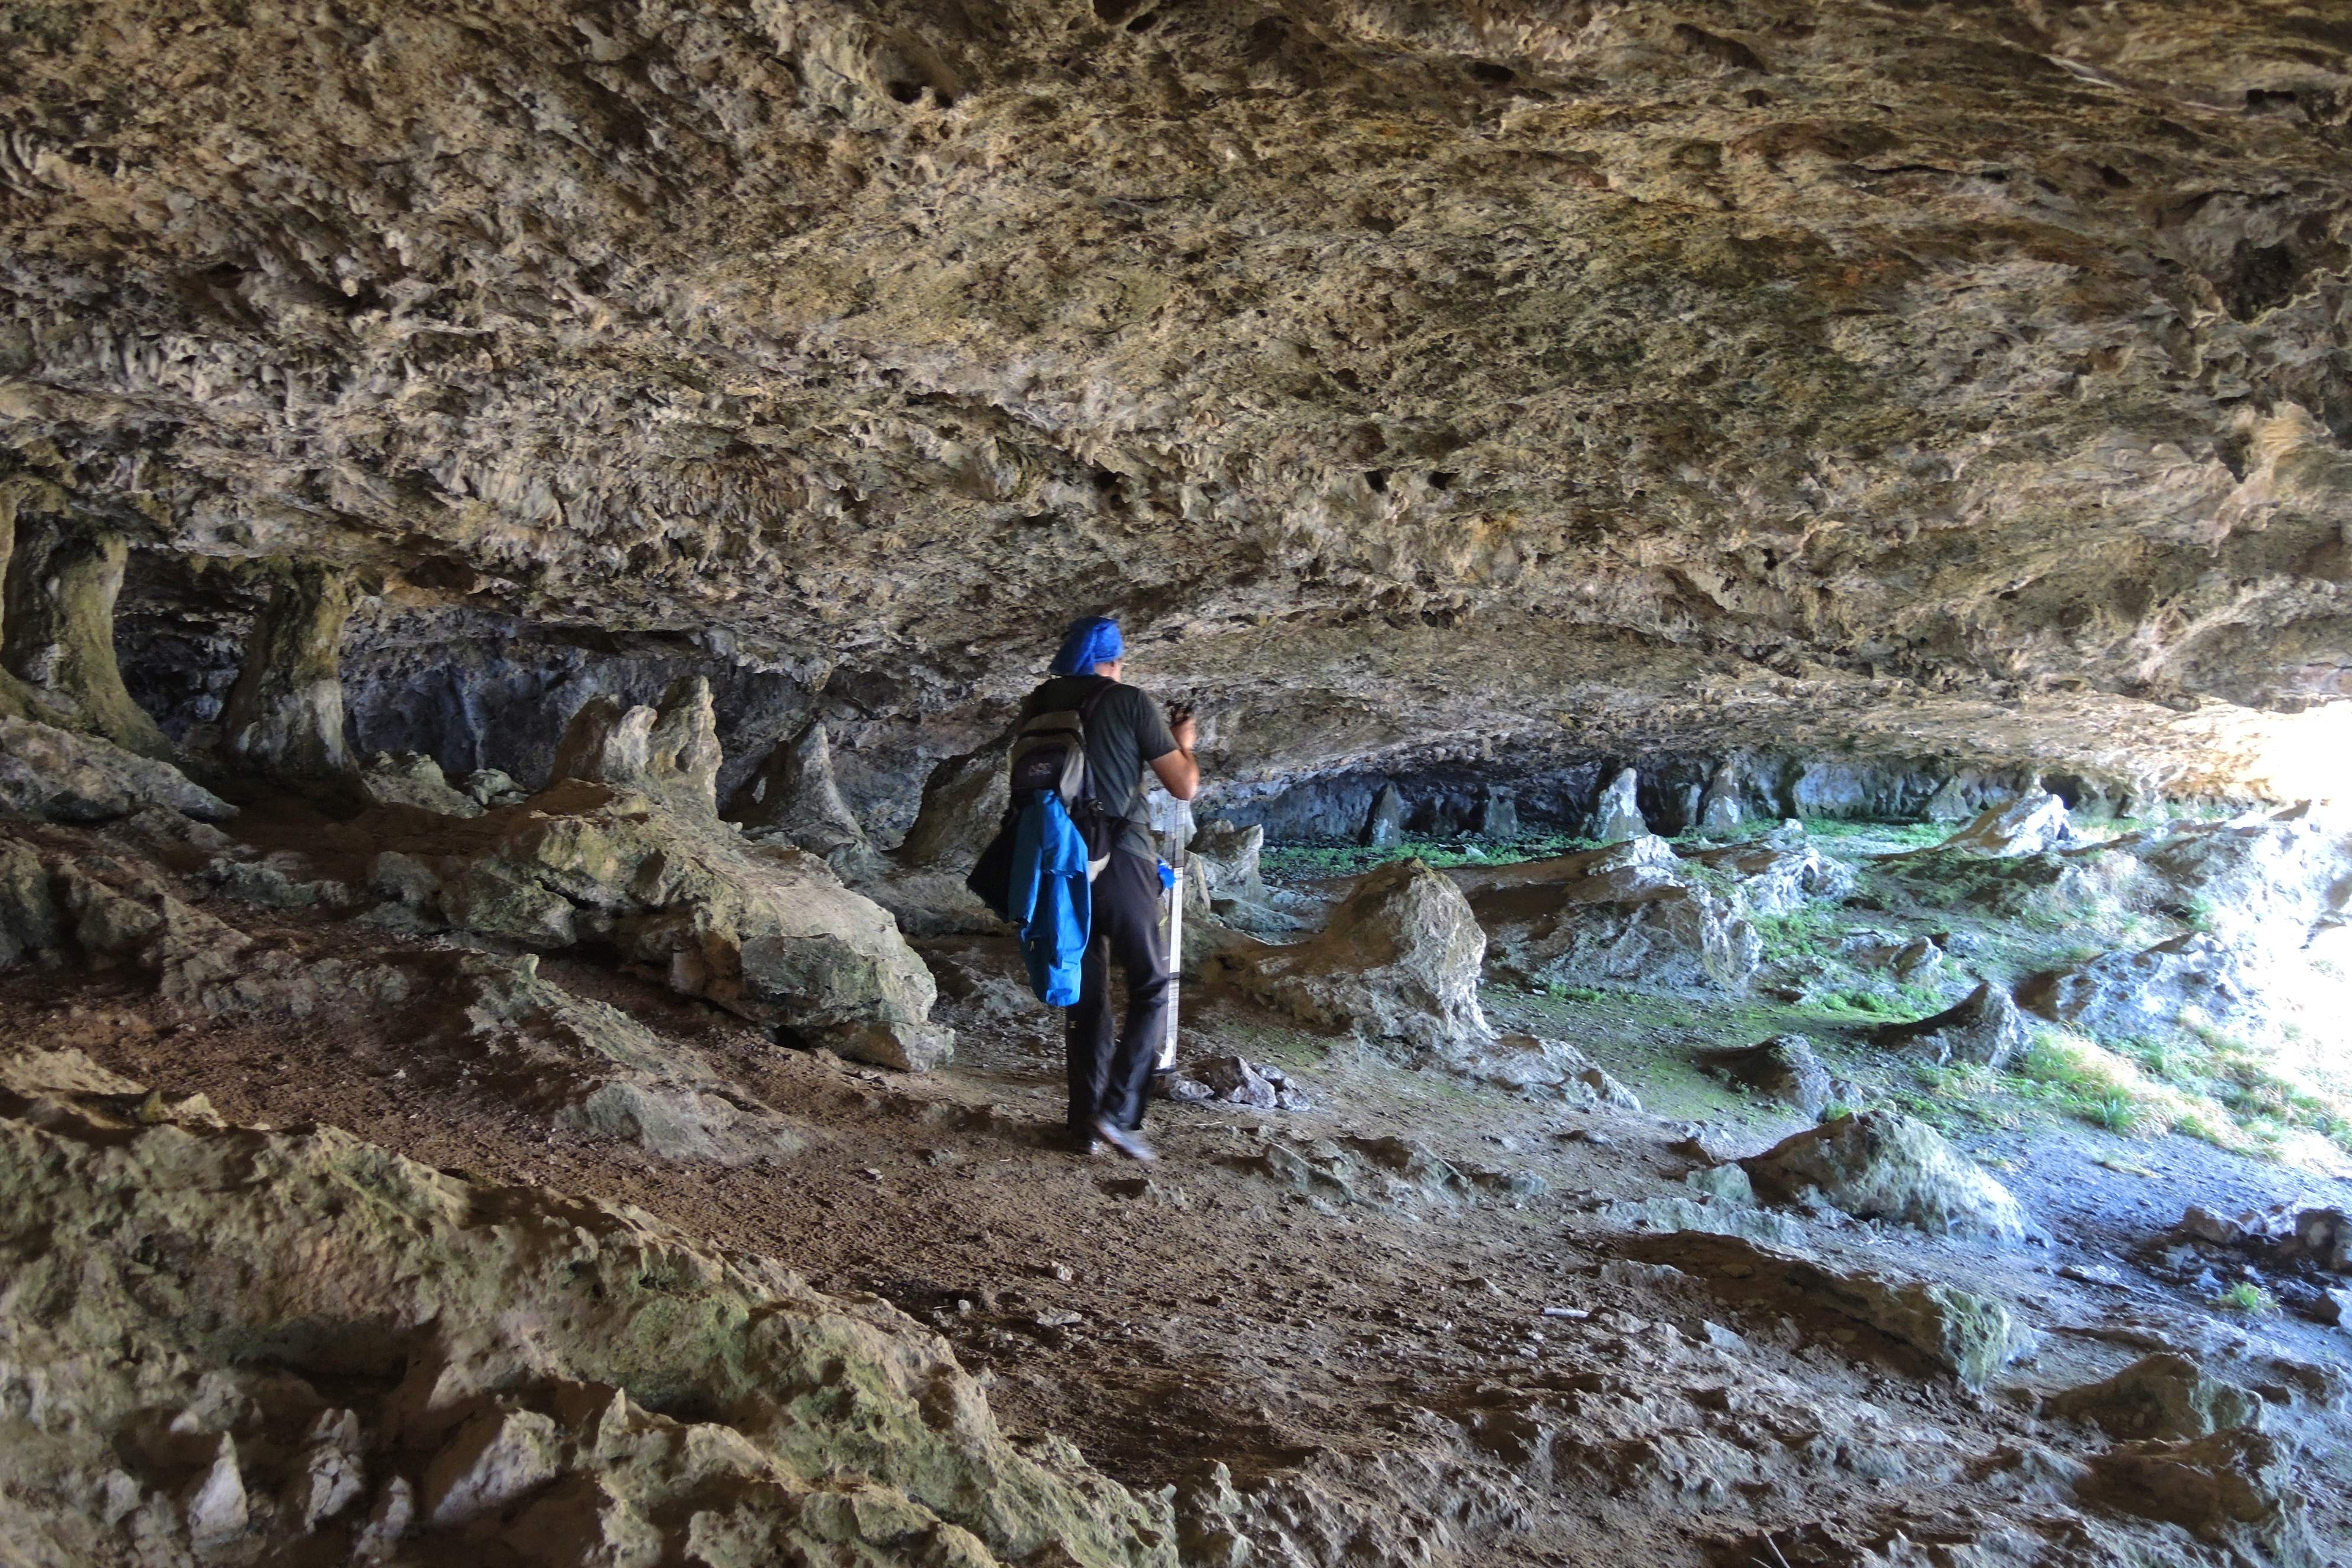 Grotta Balma Grande